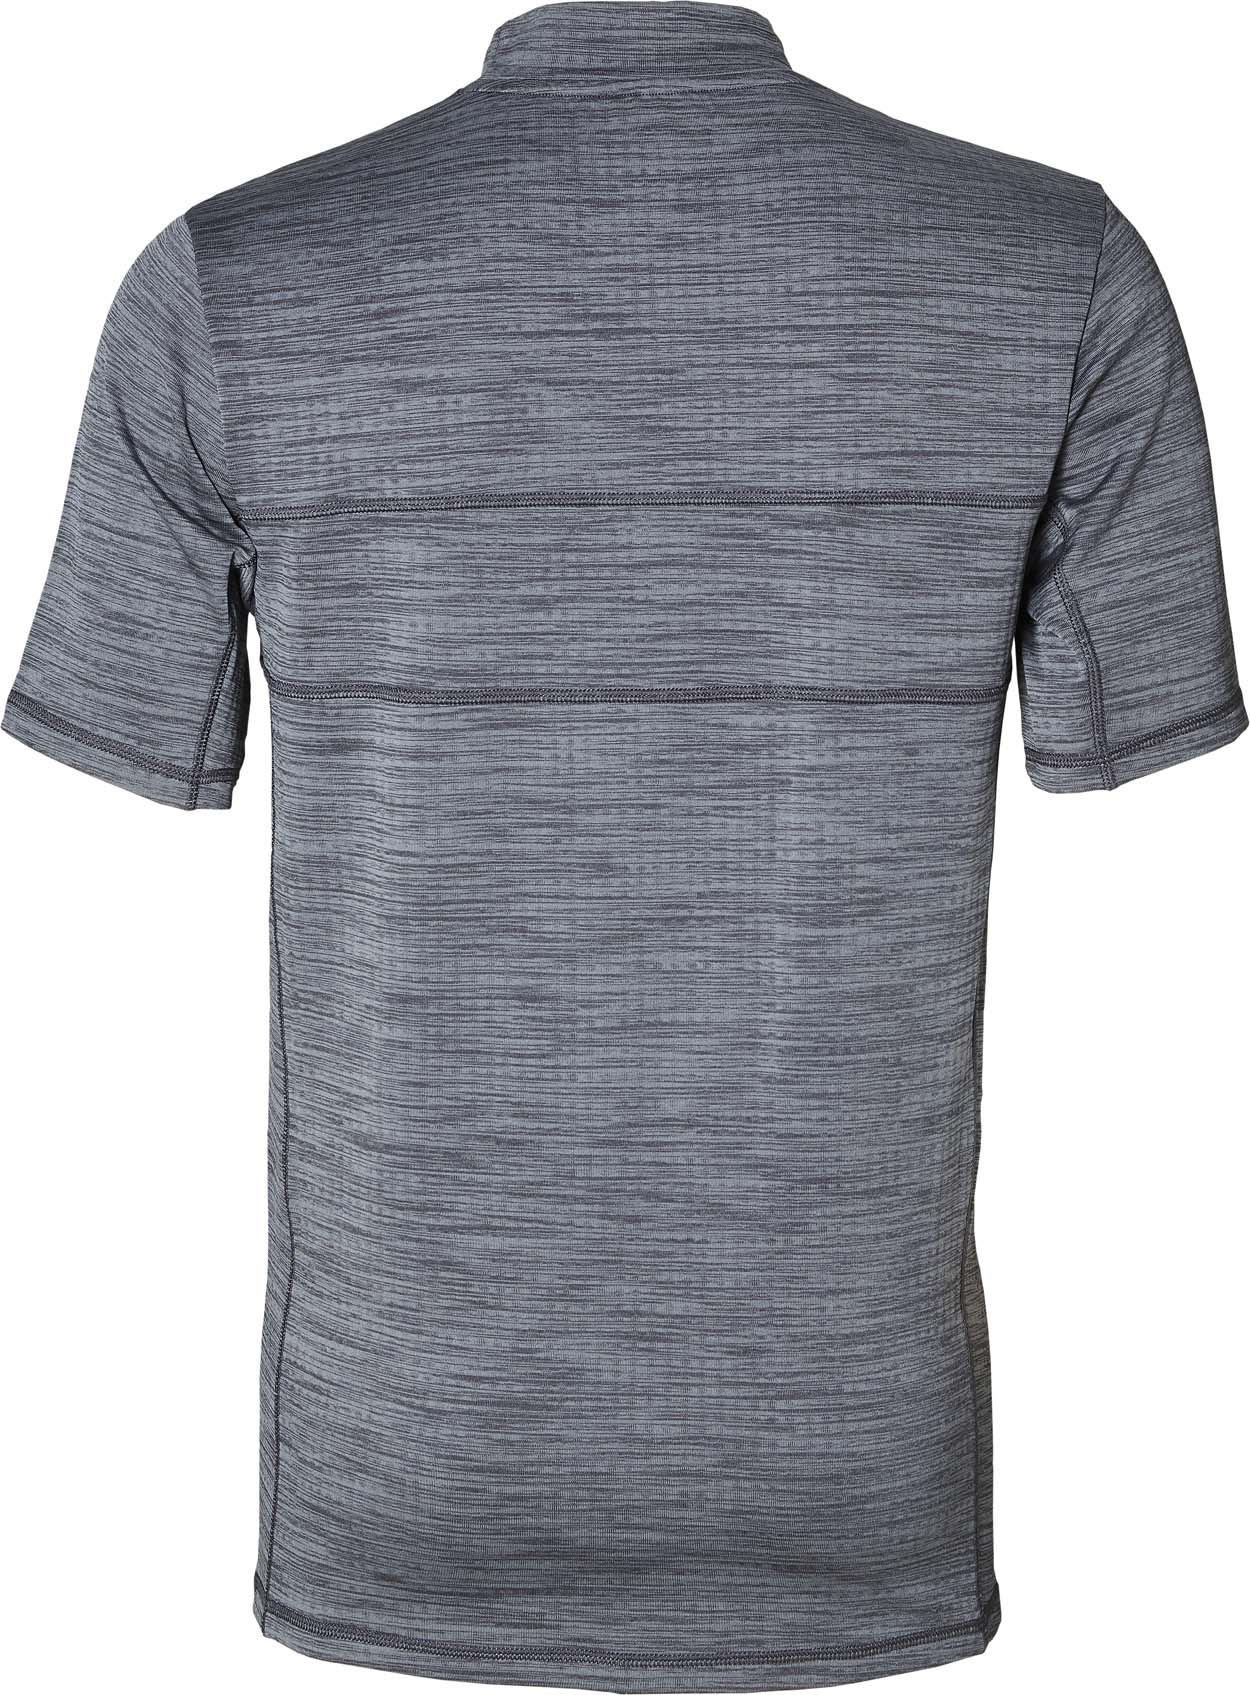 Kansas Evolve T-Shirt, FastDry, Grau/Dunkelgrau